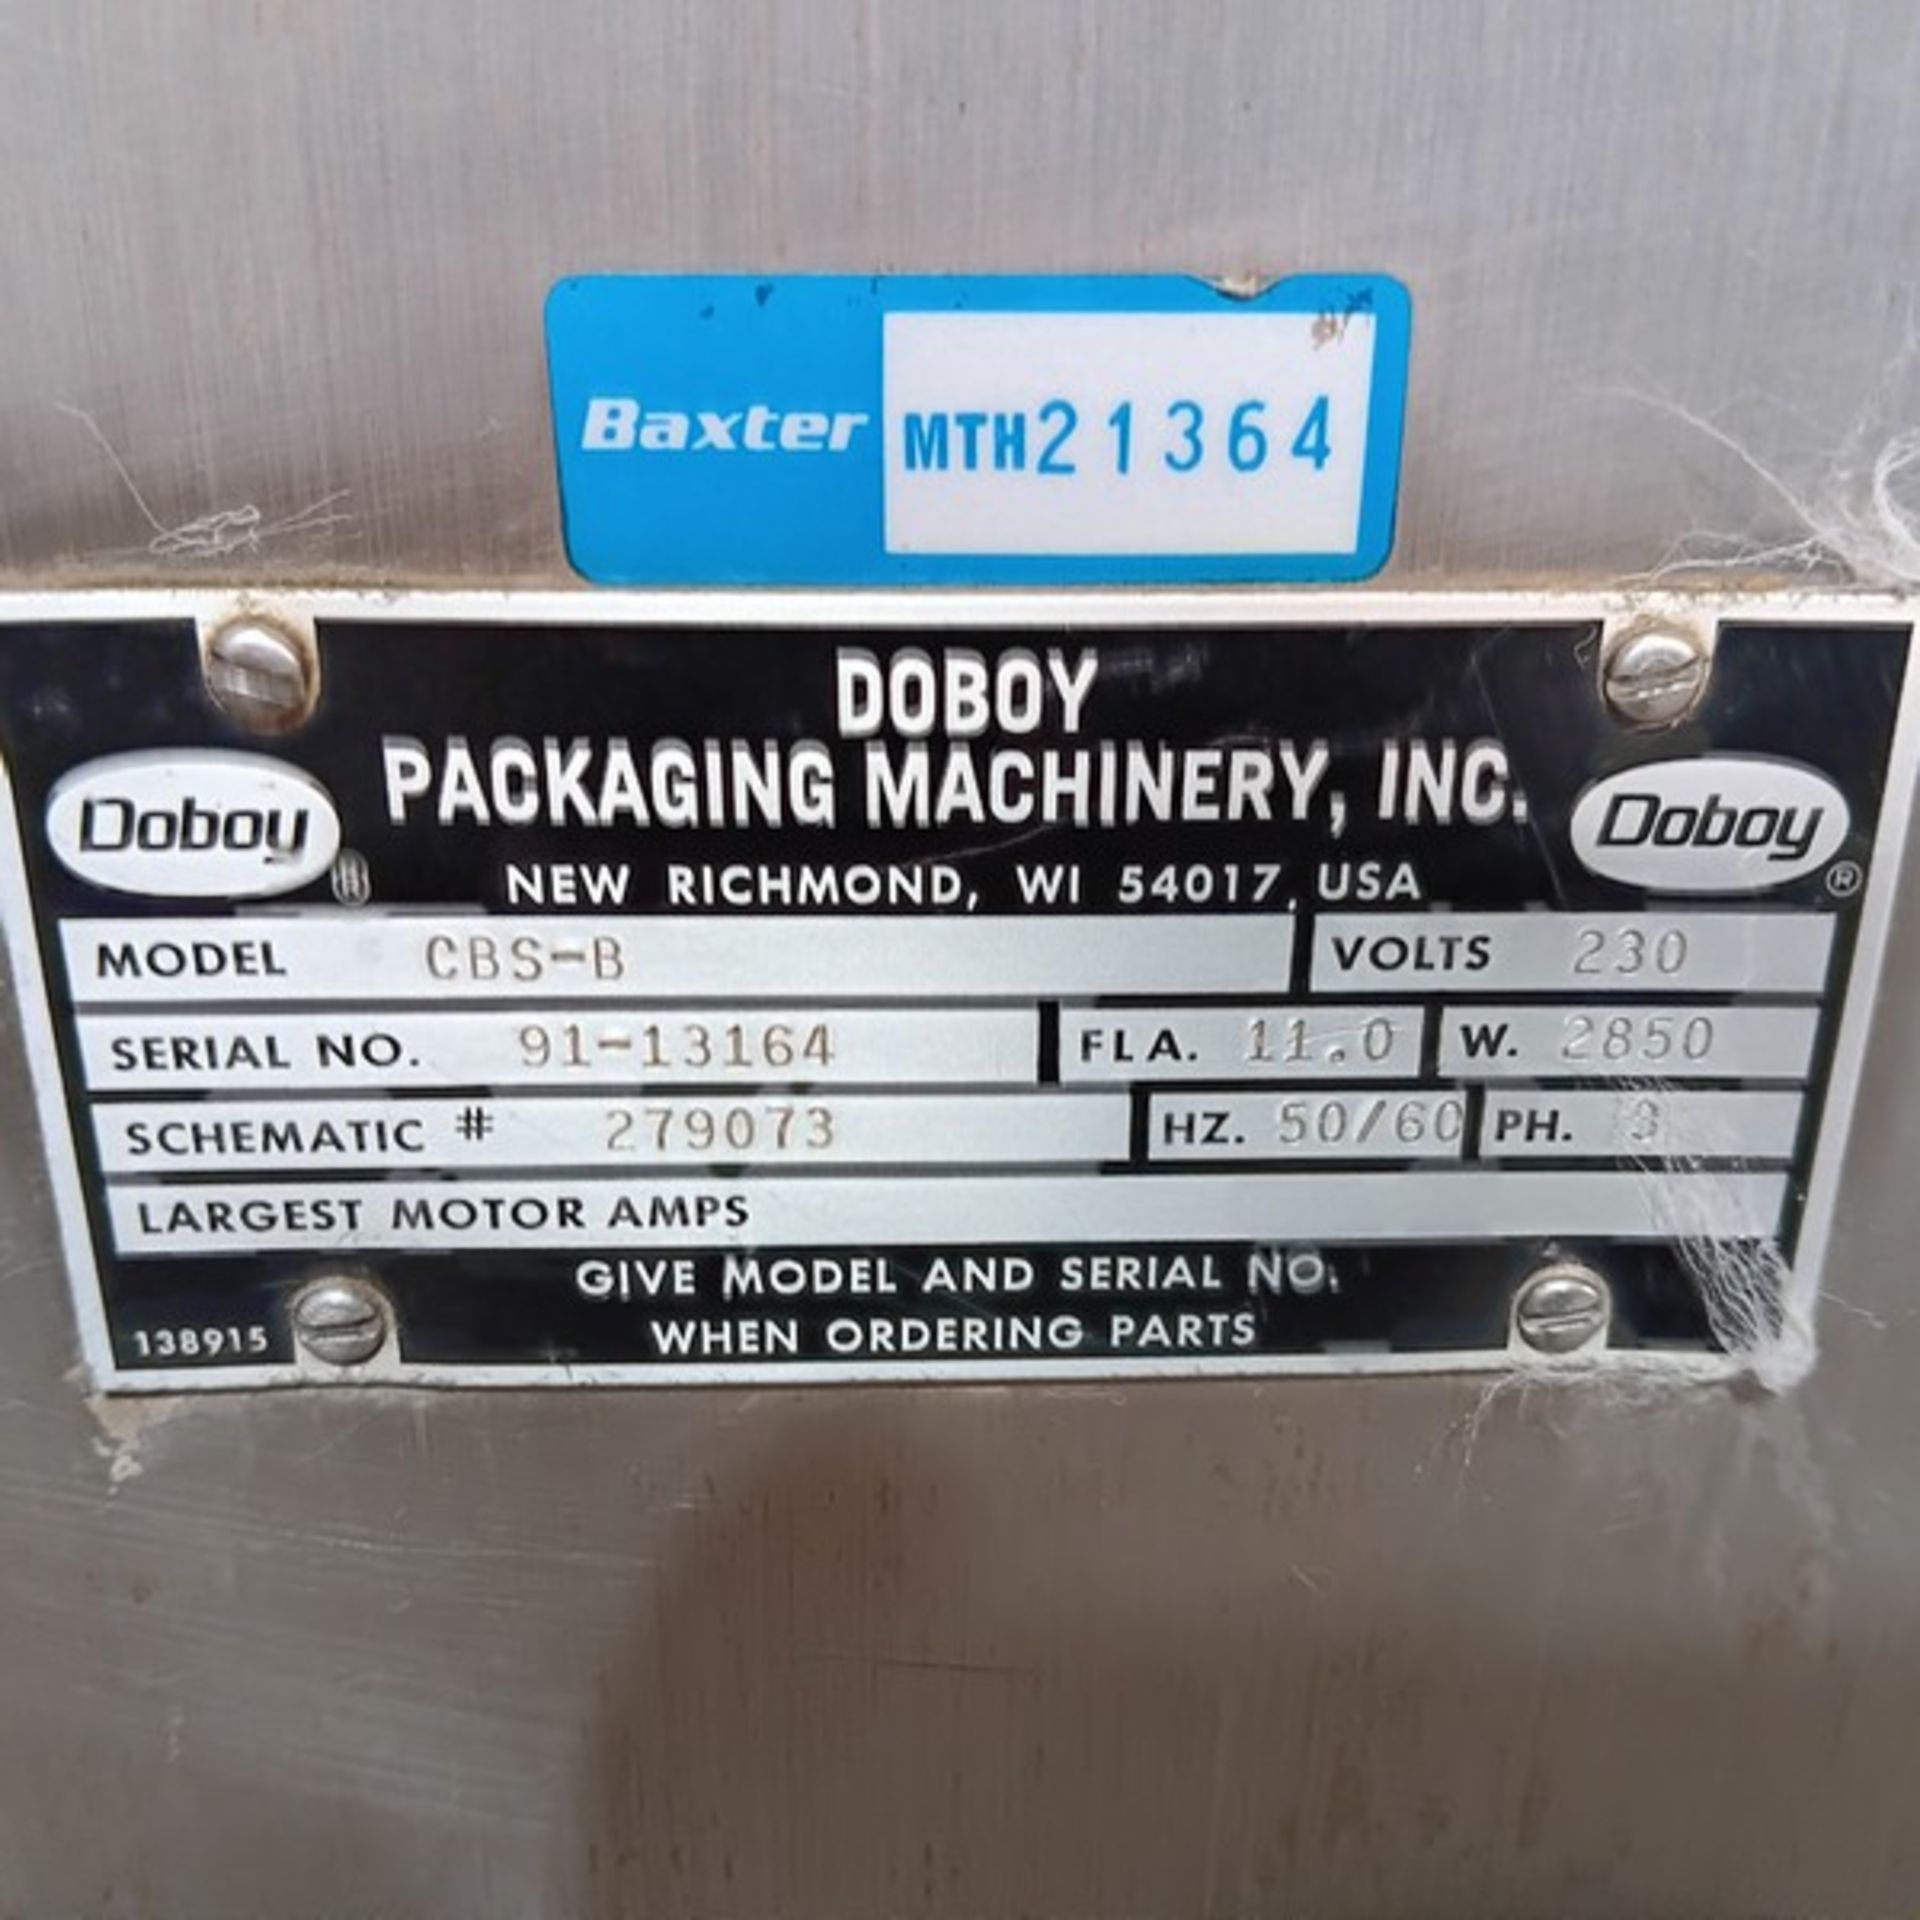 Doboy High Speed Continuous Band Bag Sealer Model CB5-B, S/N 91-13164, Volt 230, 3 Phase, Casters, - Bild 5 aus 5